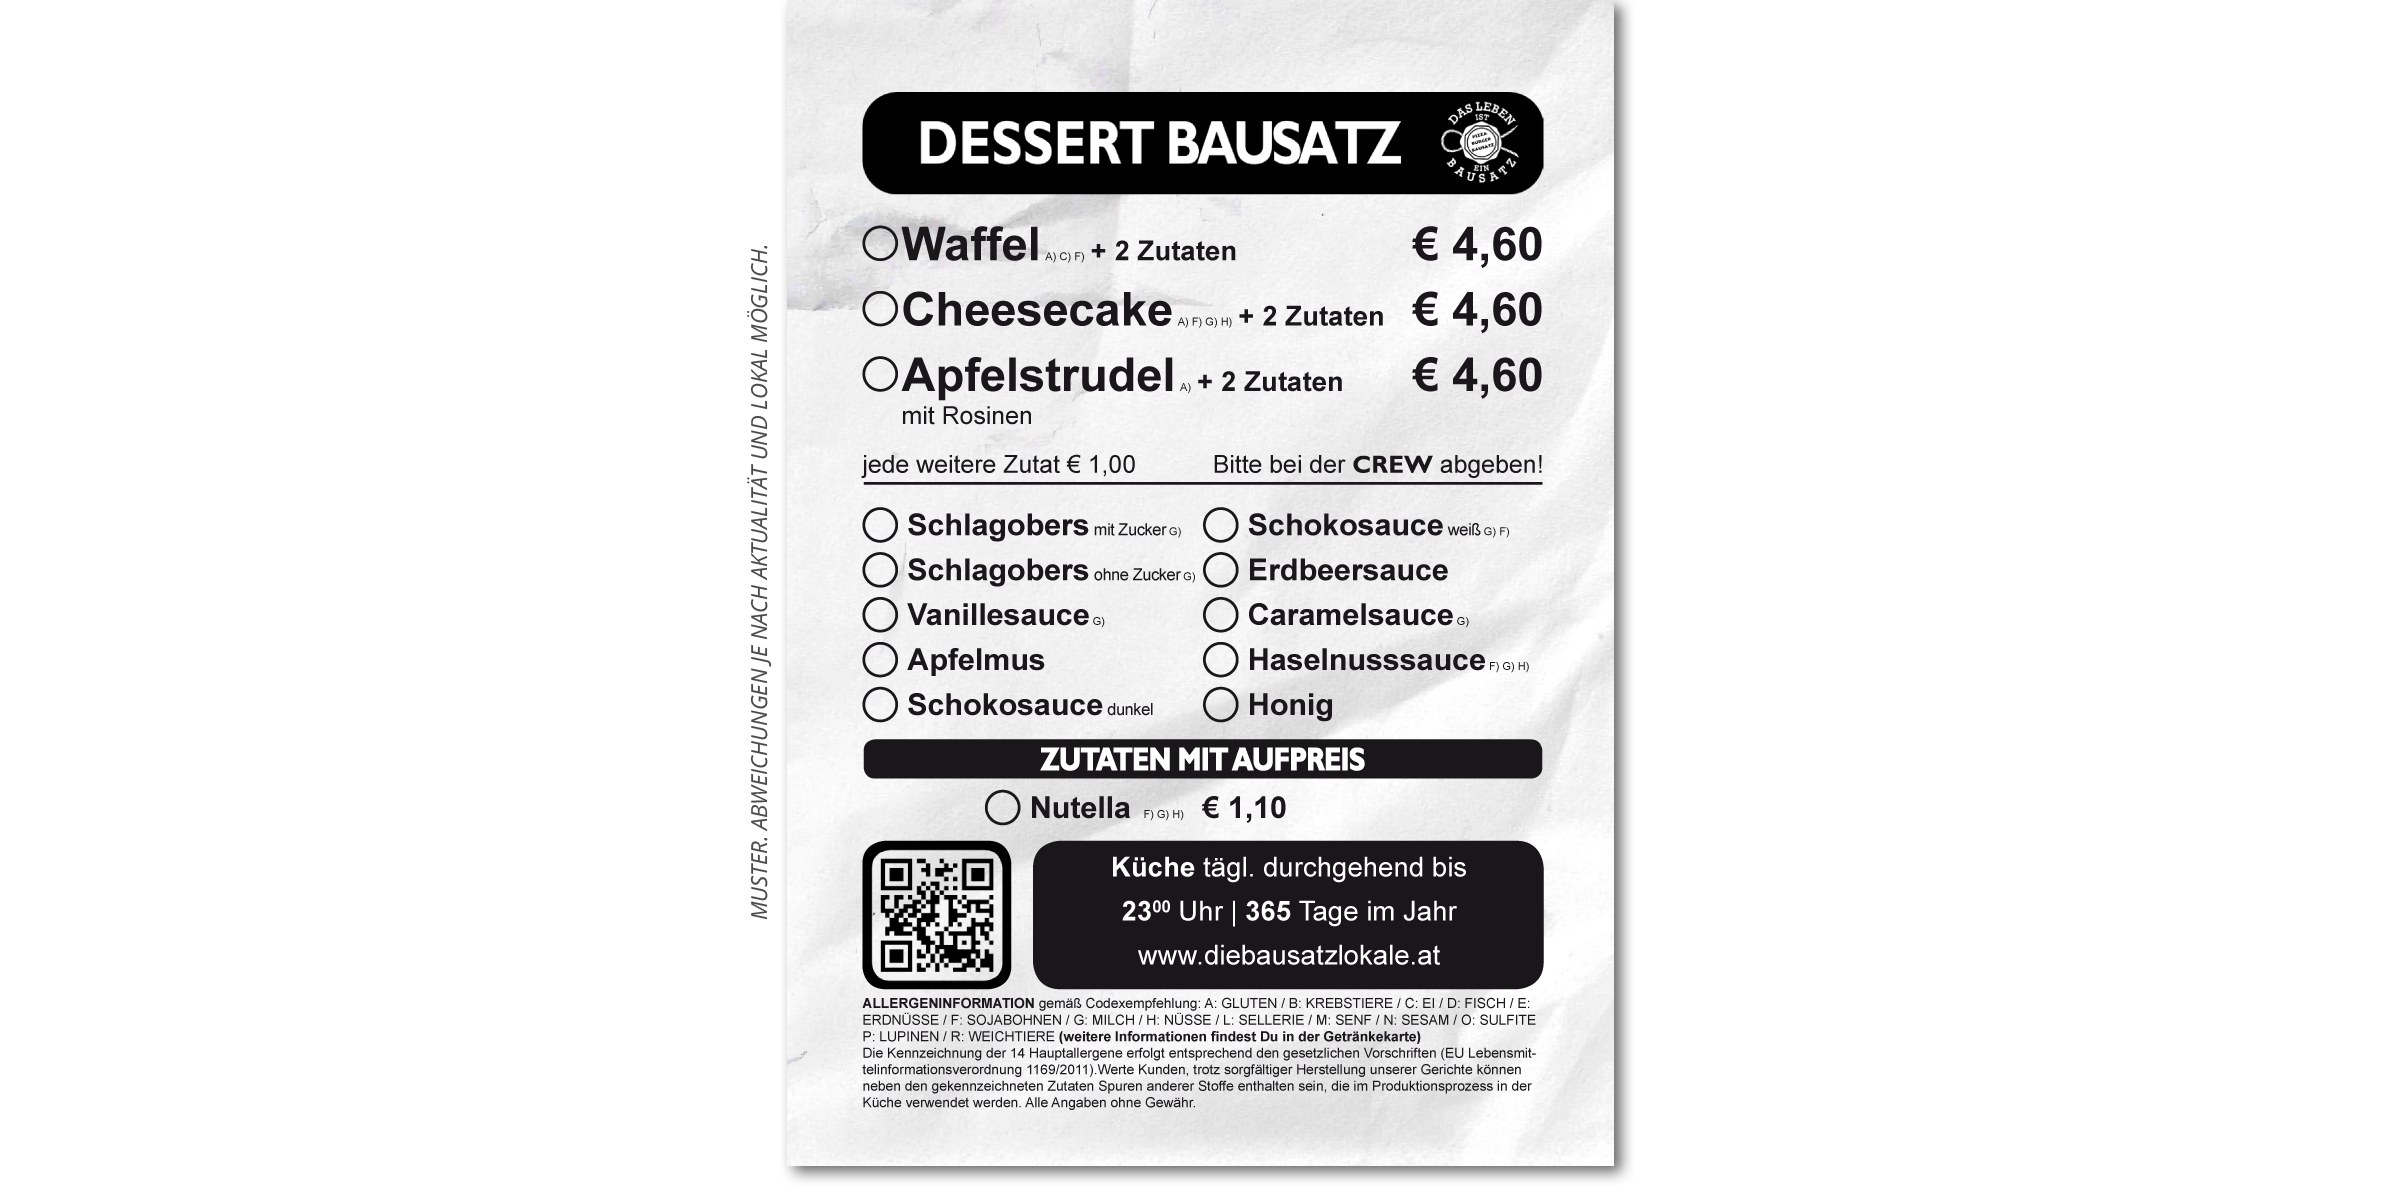 008-Graz-Pizza-Burger-Restaurant-Bausatz-Dessert-Waffel-Cheesecake-Apfelstrudel-Uni-Bierbaron